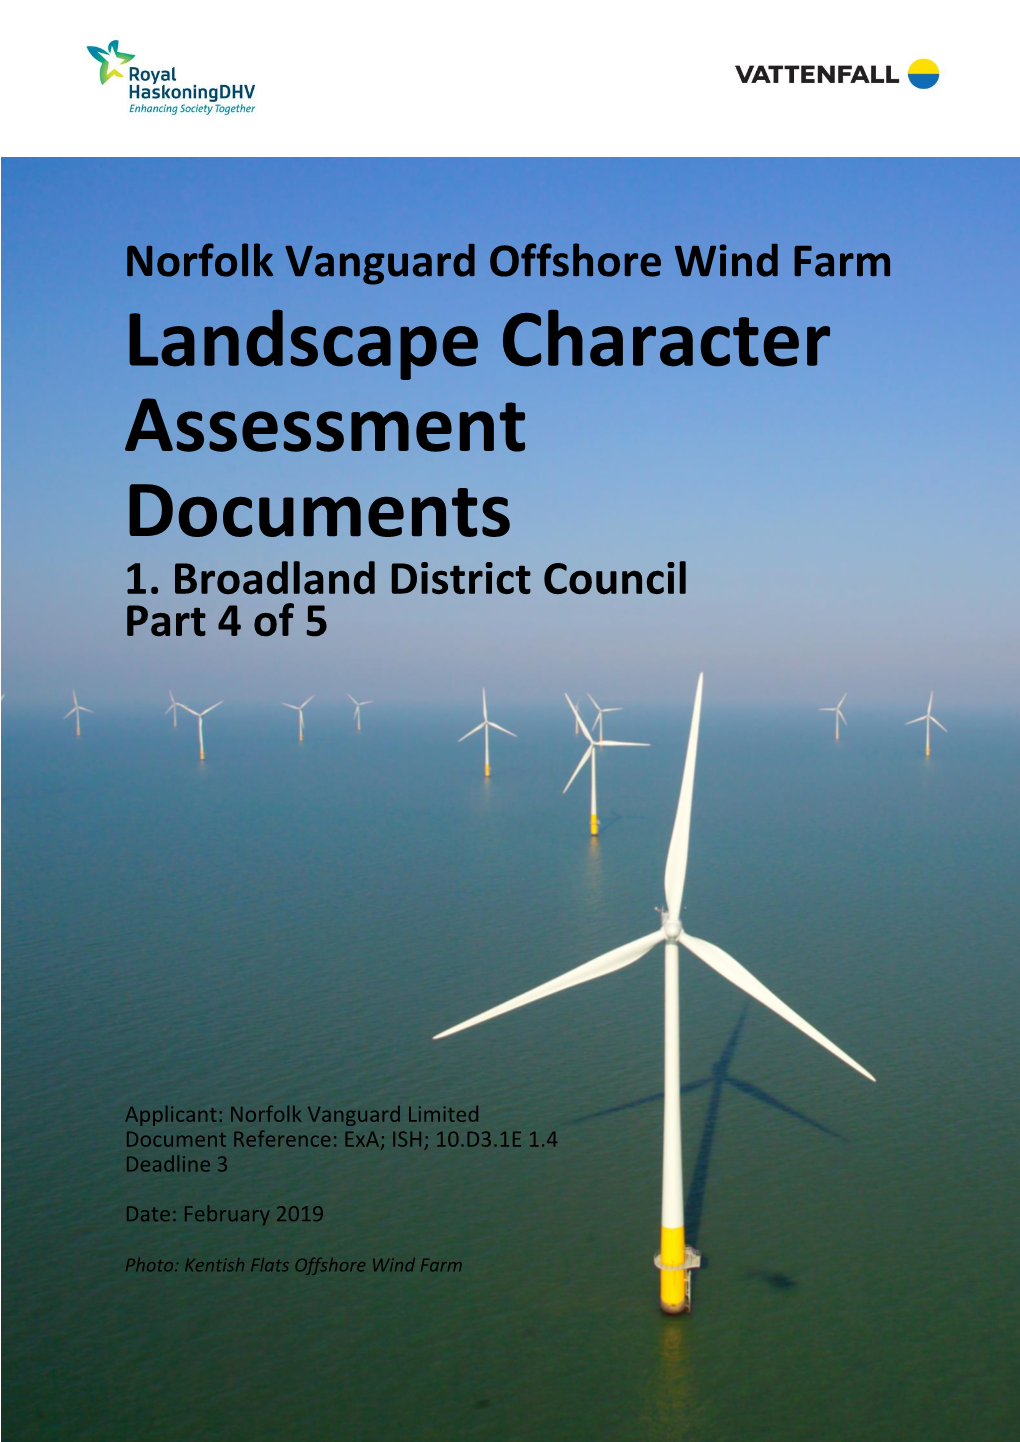 Broadland District Council Landscape Character Assessment